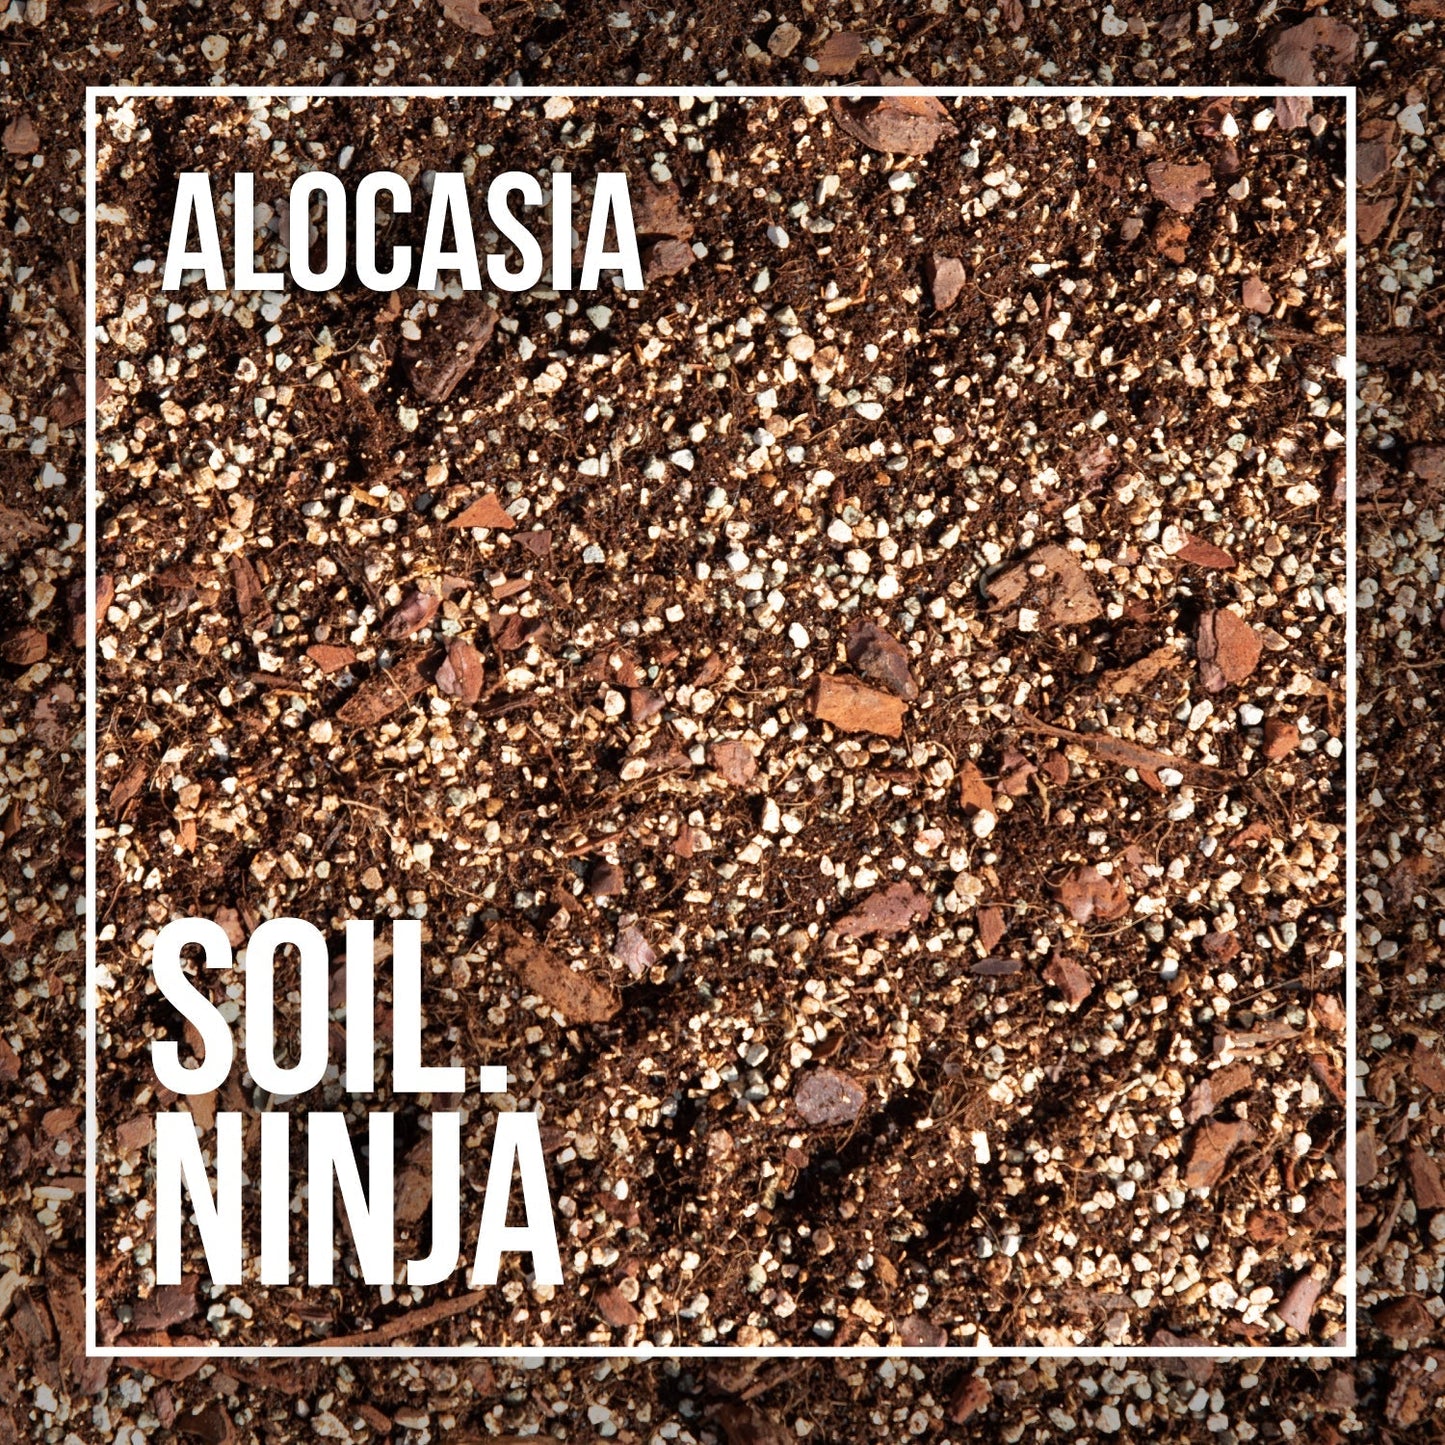 Substrate Soil Ninja 'Alocasia Blend'